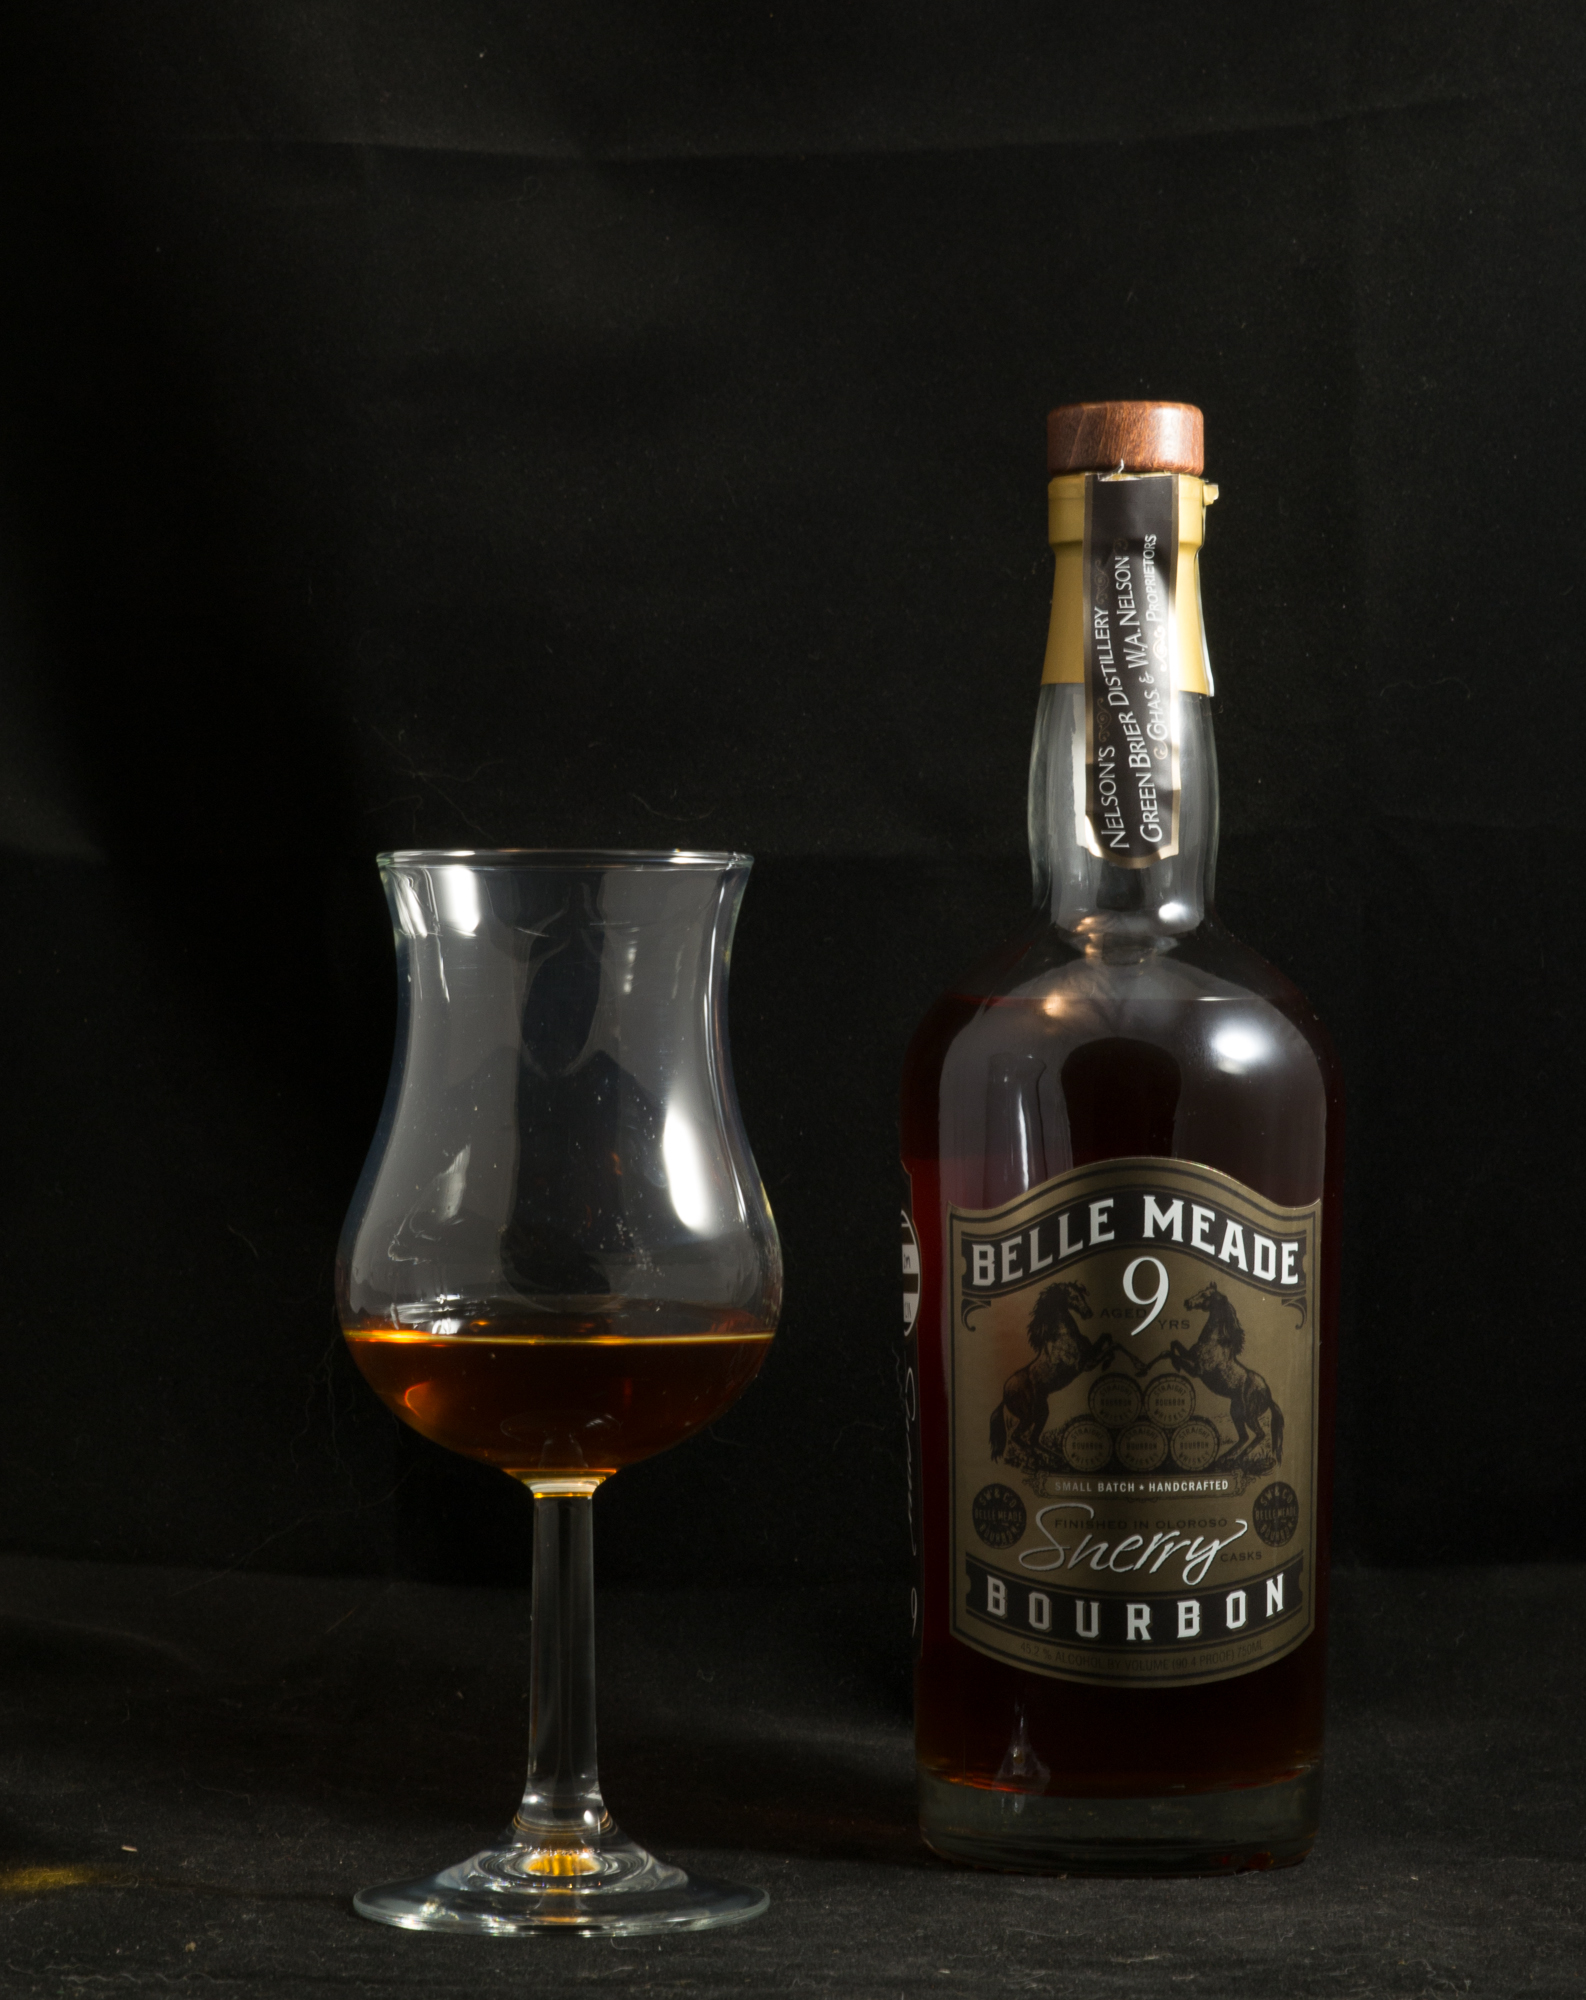 Nelson's Green Brier Distillery Belle Meade 9 Year Sherry Bourbon